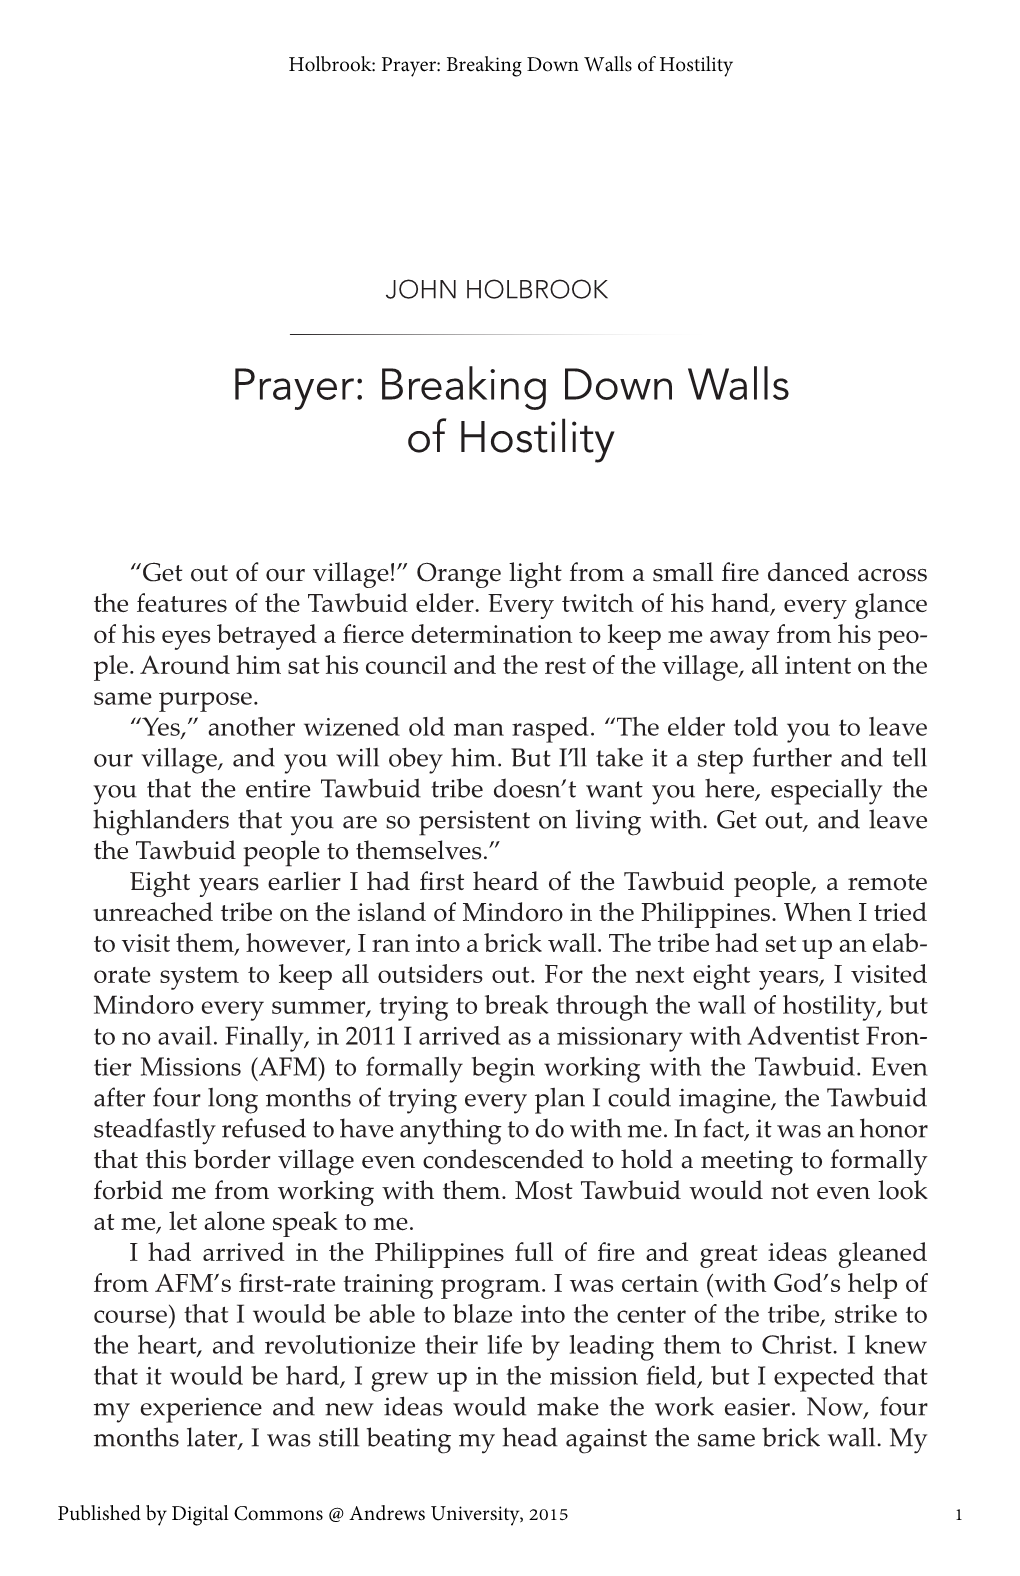 Prayer: Breaking Down Walls of Hostility